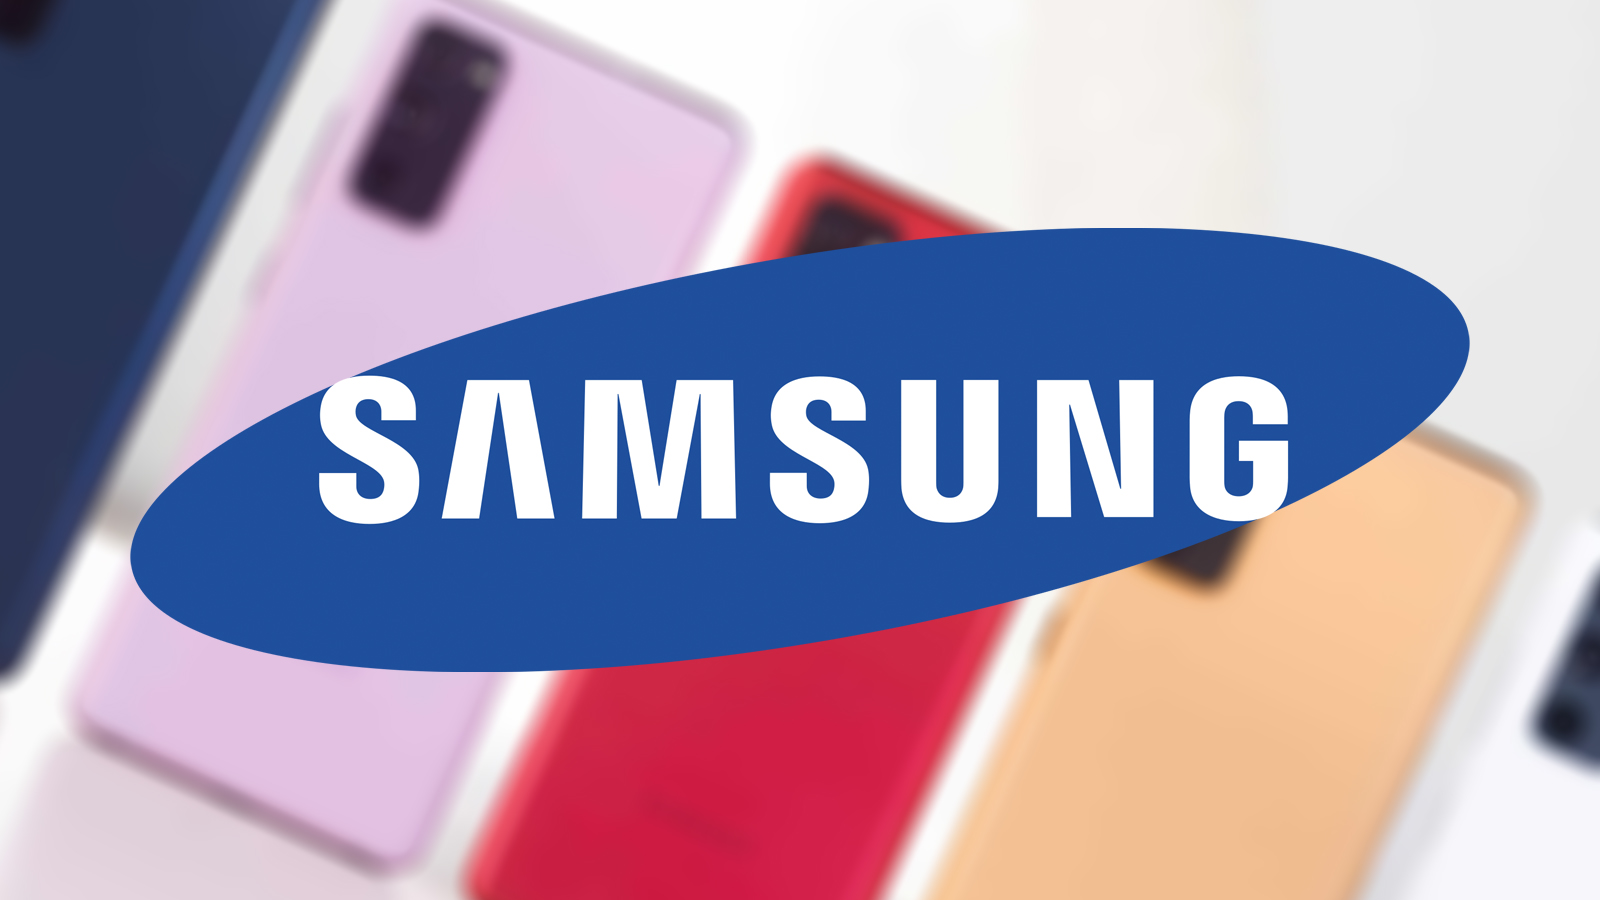 Samsung Galaxy S22 series leaks in full in brand new